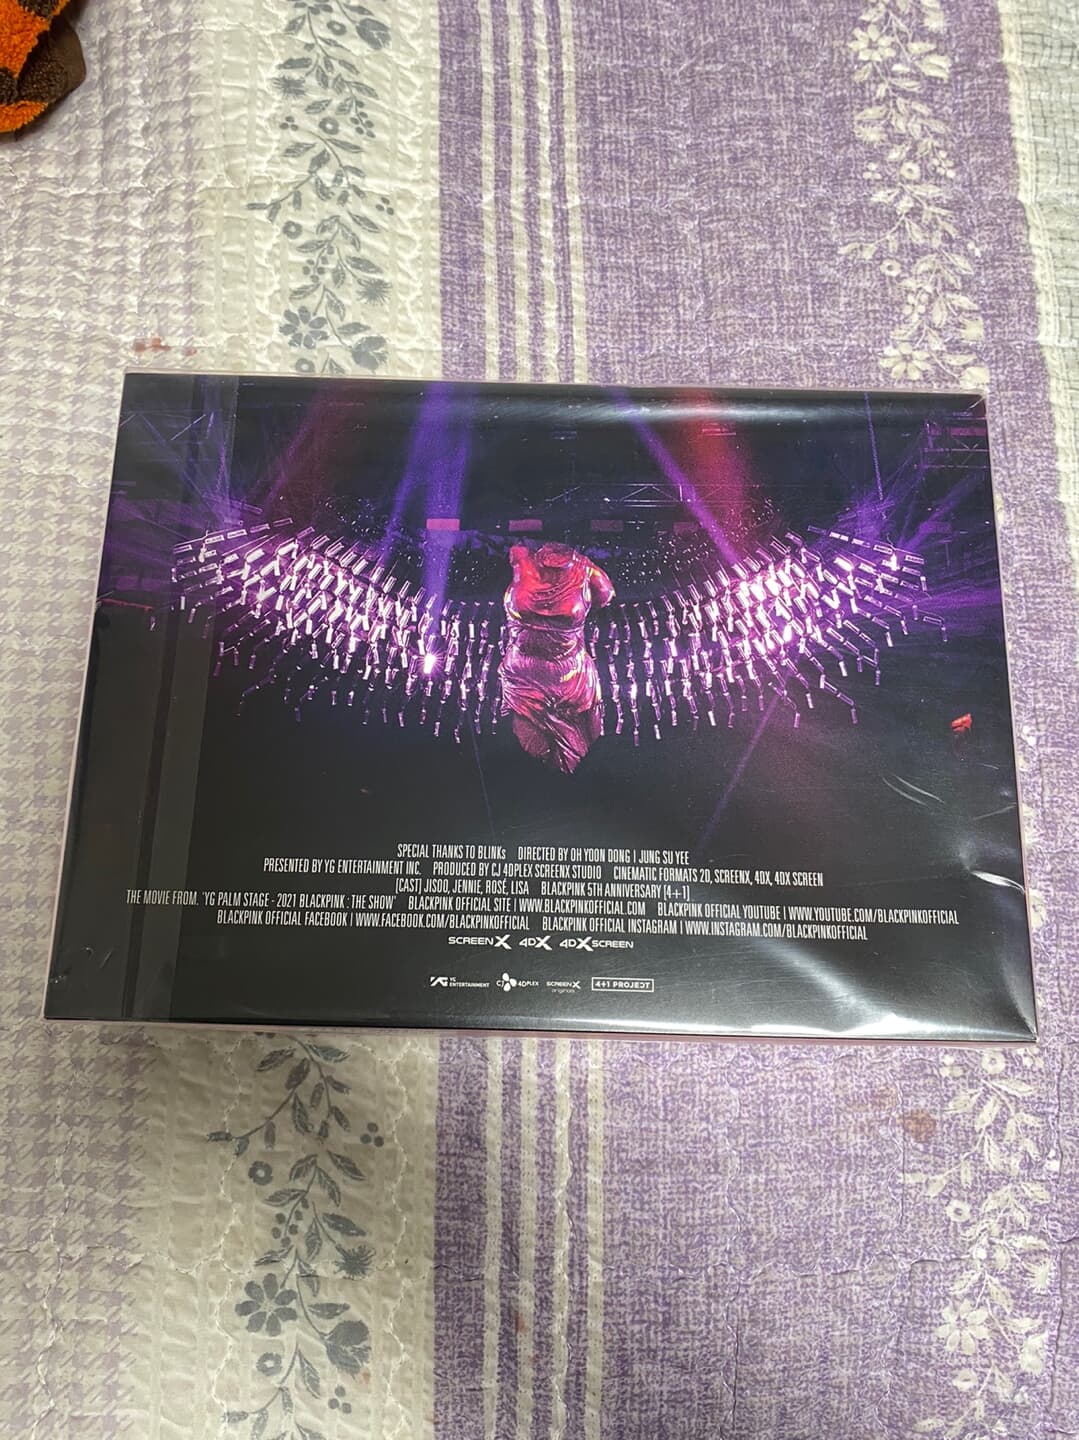 BLACKPINK THE MOVIE -JAPAN PREMIUM EDITION- Blu-ray BLACKPINK